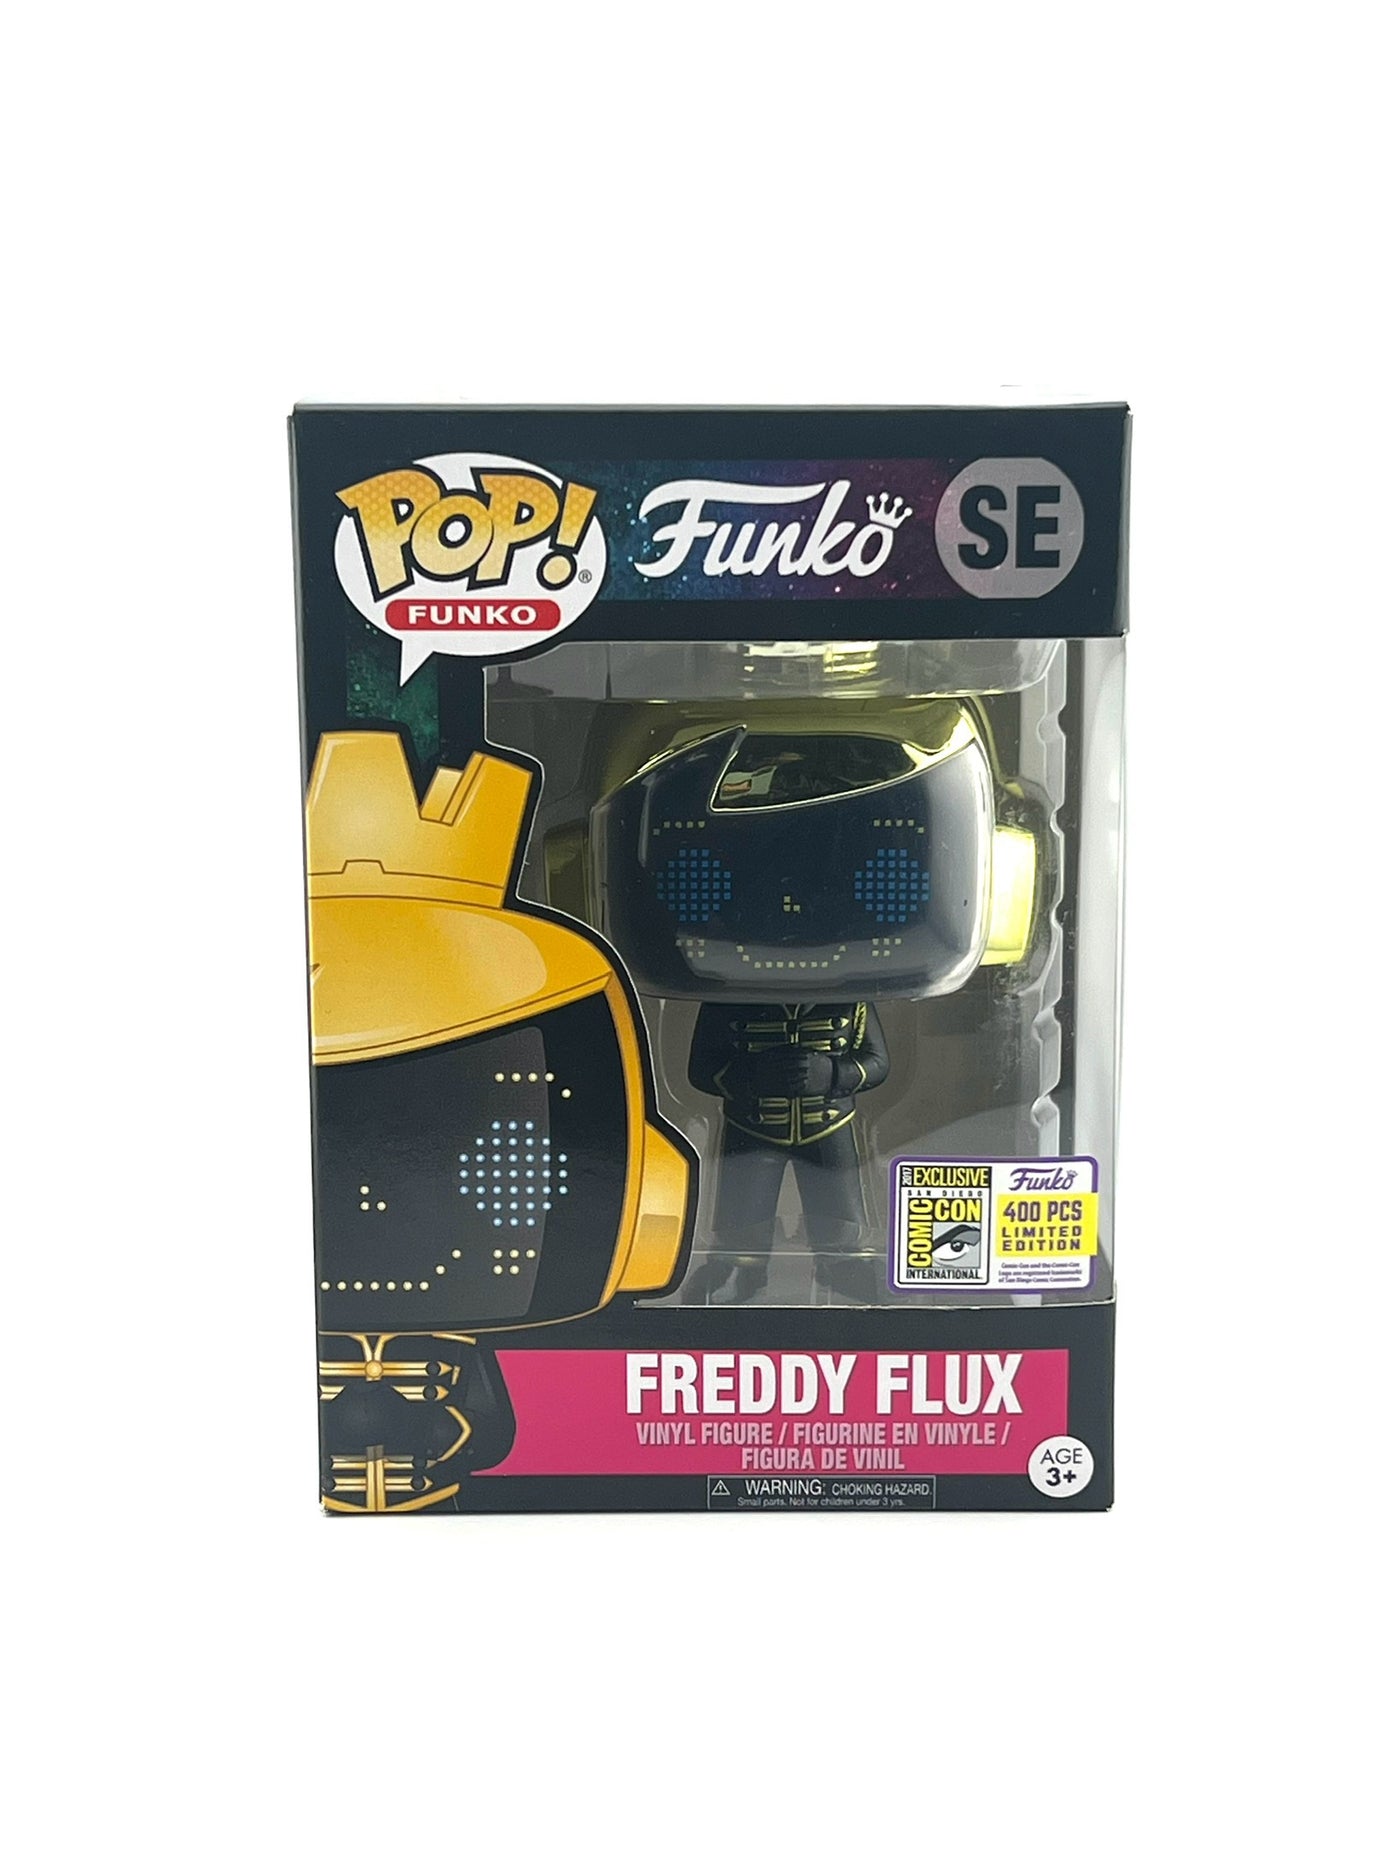 Funko pop! Freddy flux SE (2017 SDCC 400 pcs)